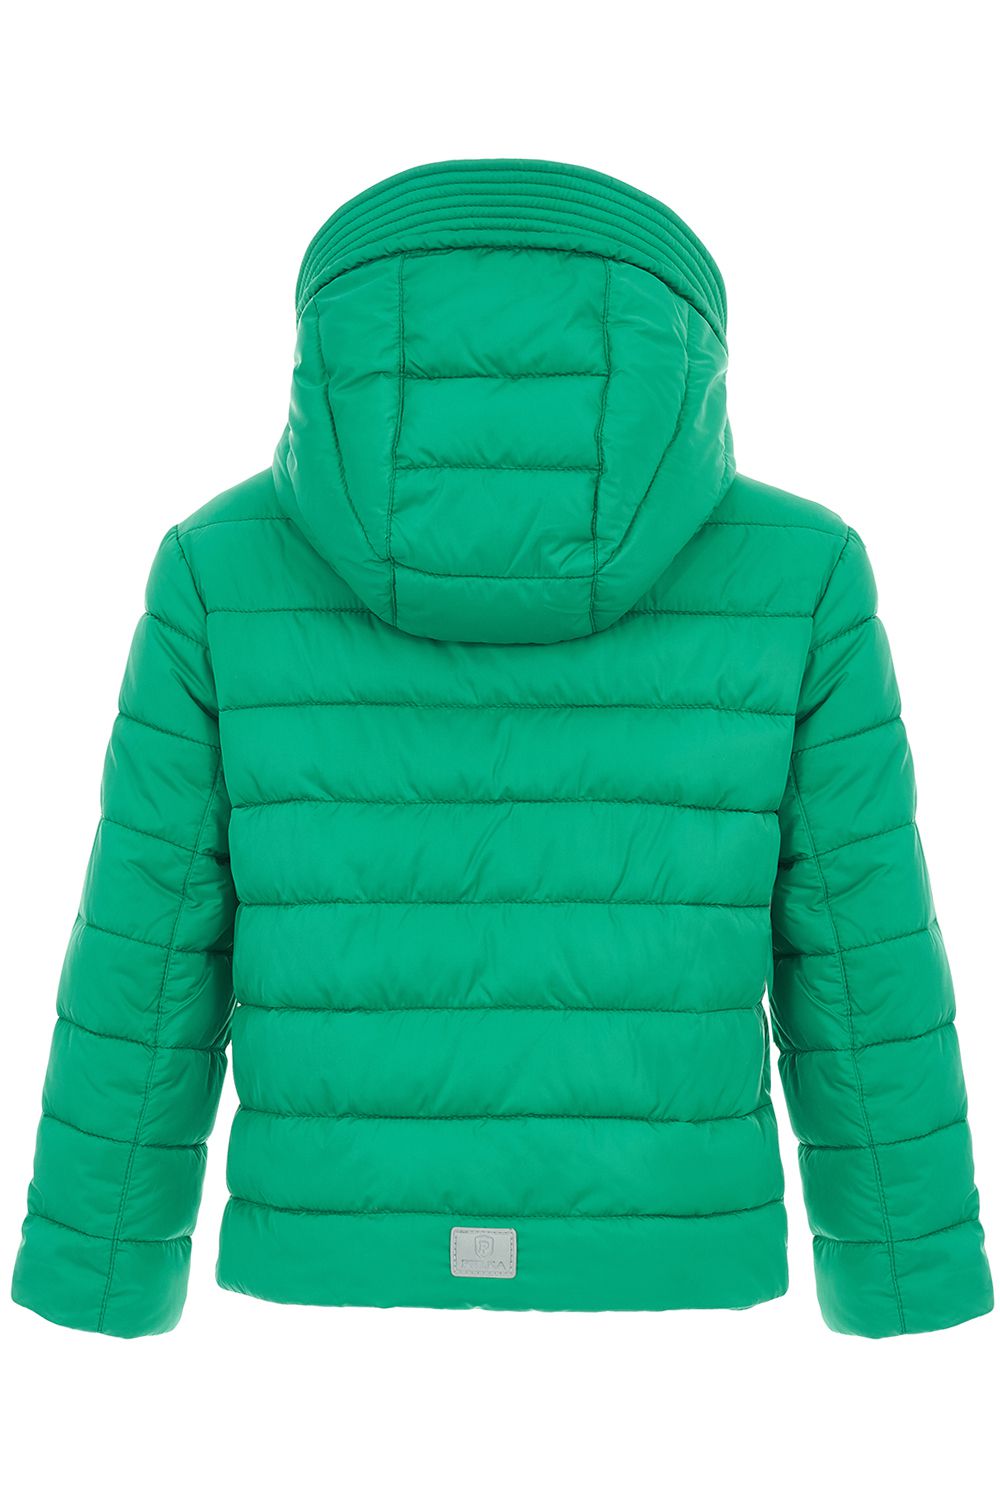 Куртка Pulka, размер 110, цвет зеленый PUFSB-816-10113-600 - фото 2